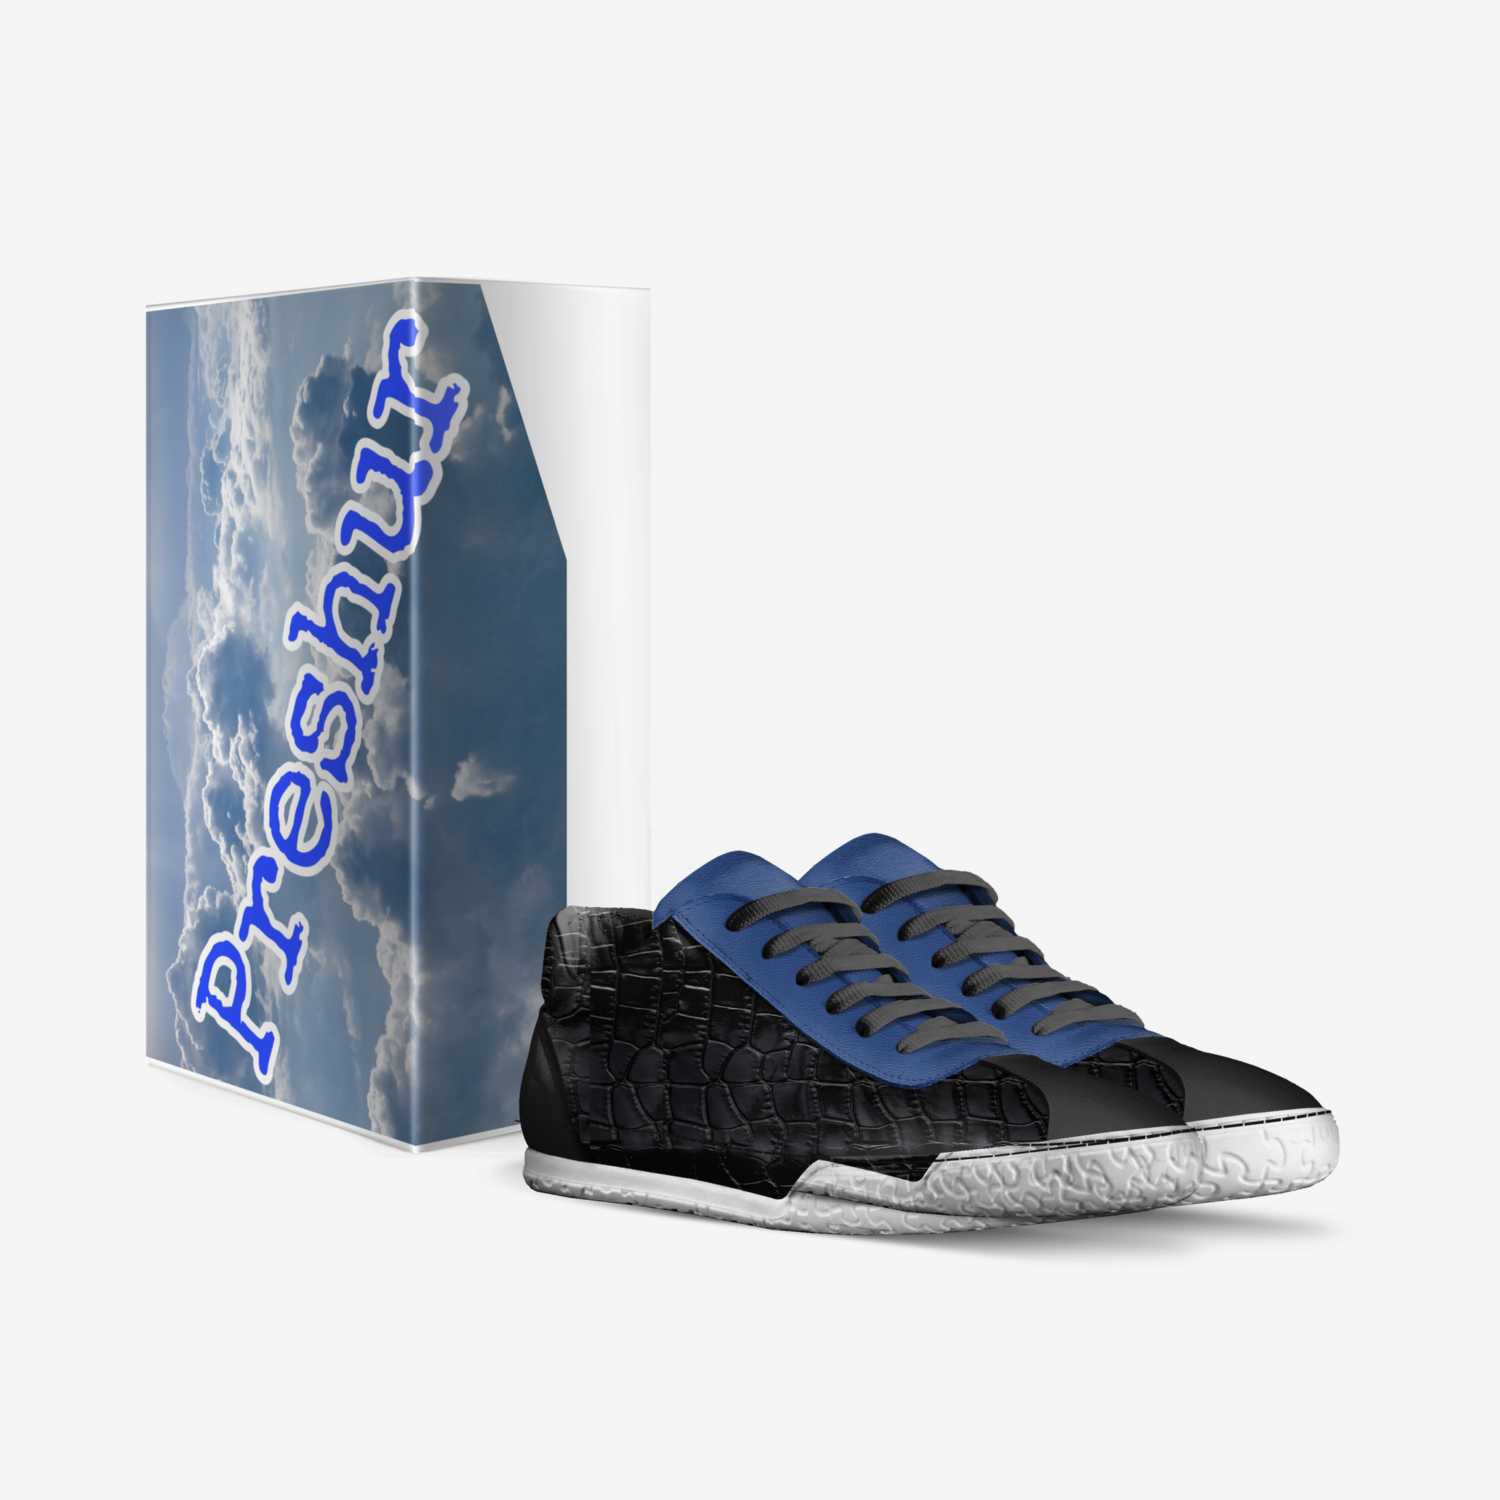 Preshur custom made in Italy shoes by Rashad Abdullah | Box view